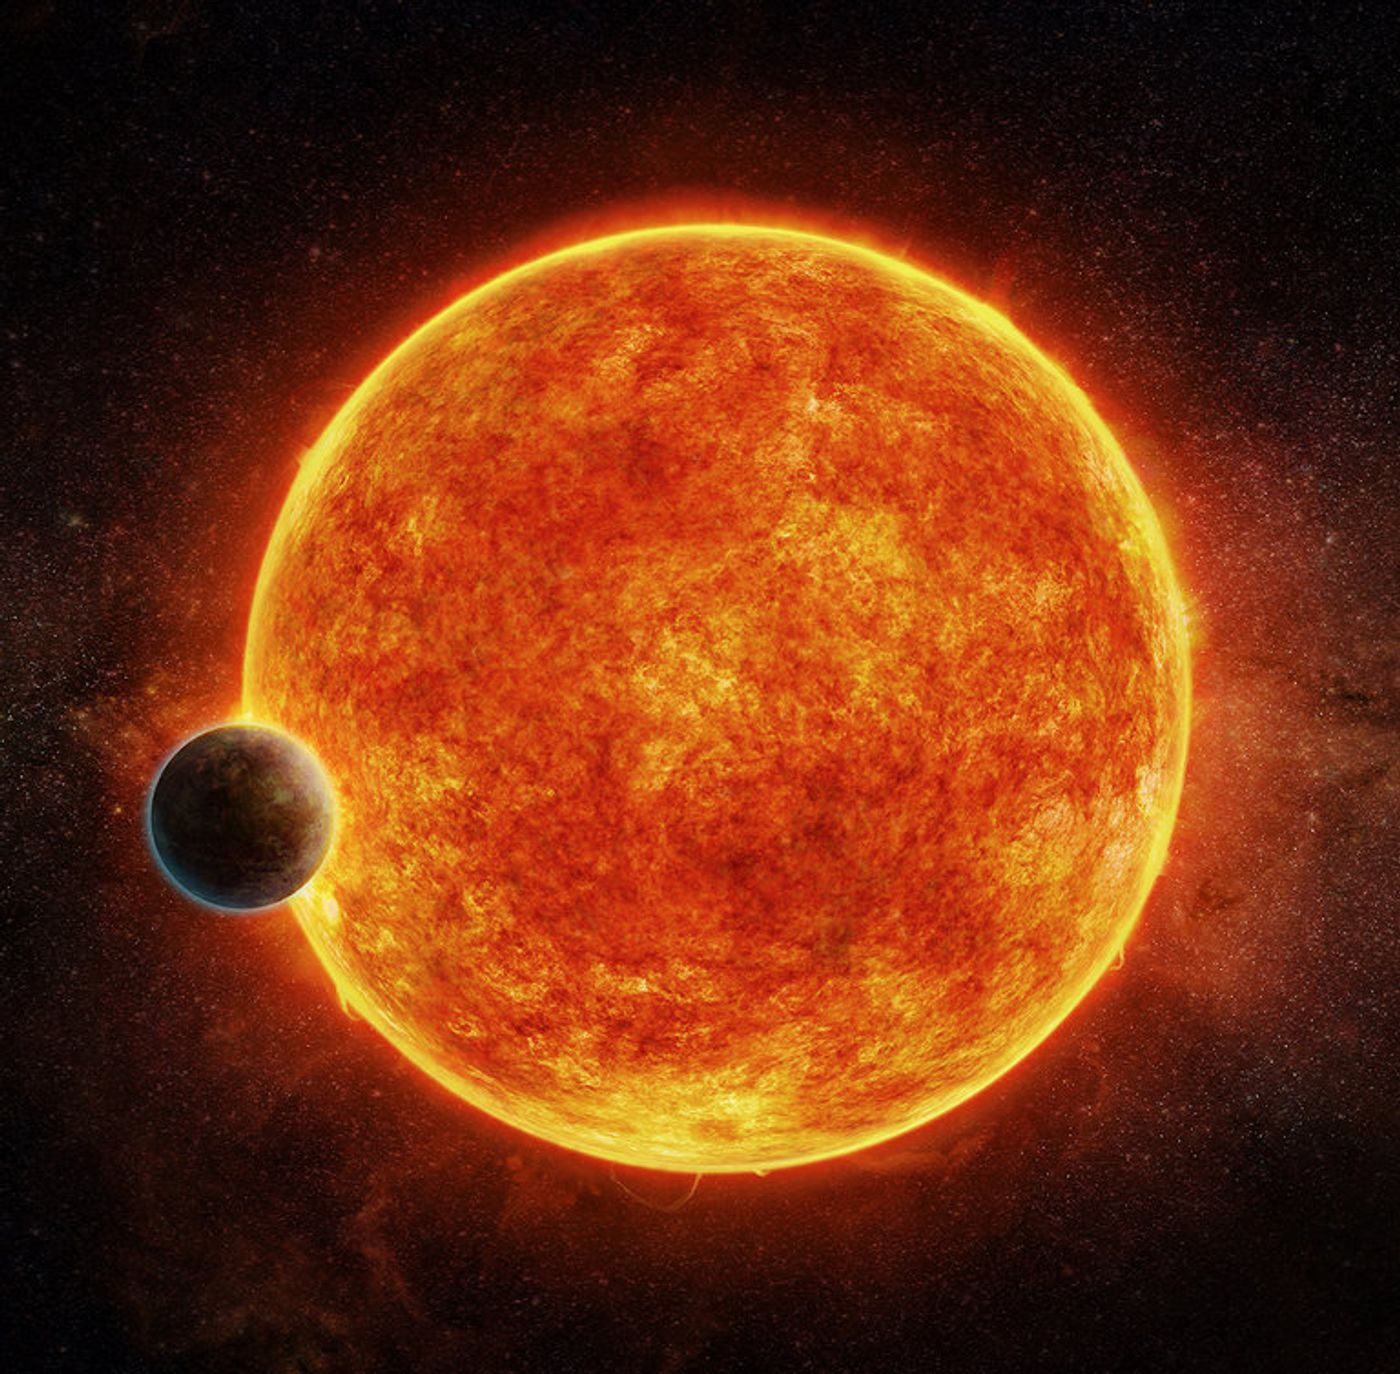 An artist's impression of LHS 1140b as it orbits its host star.